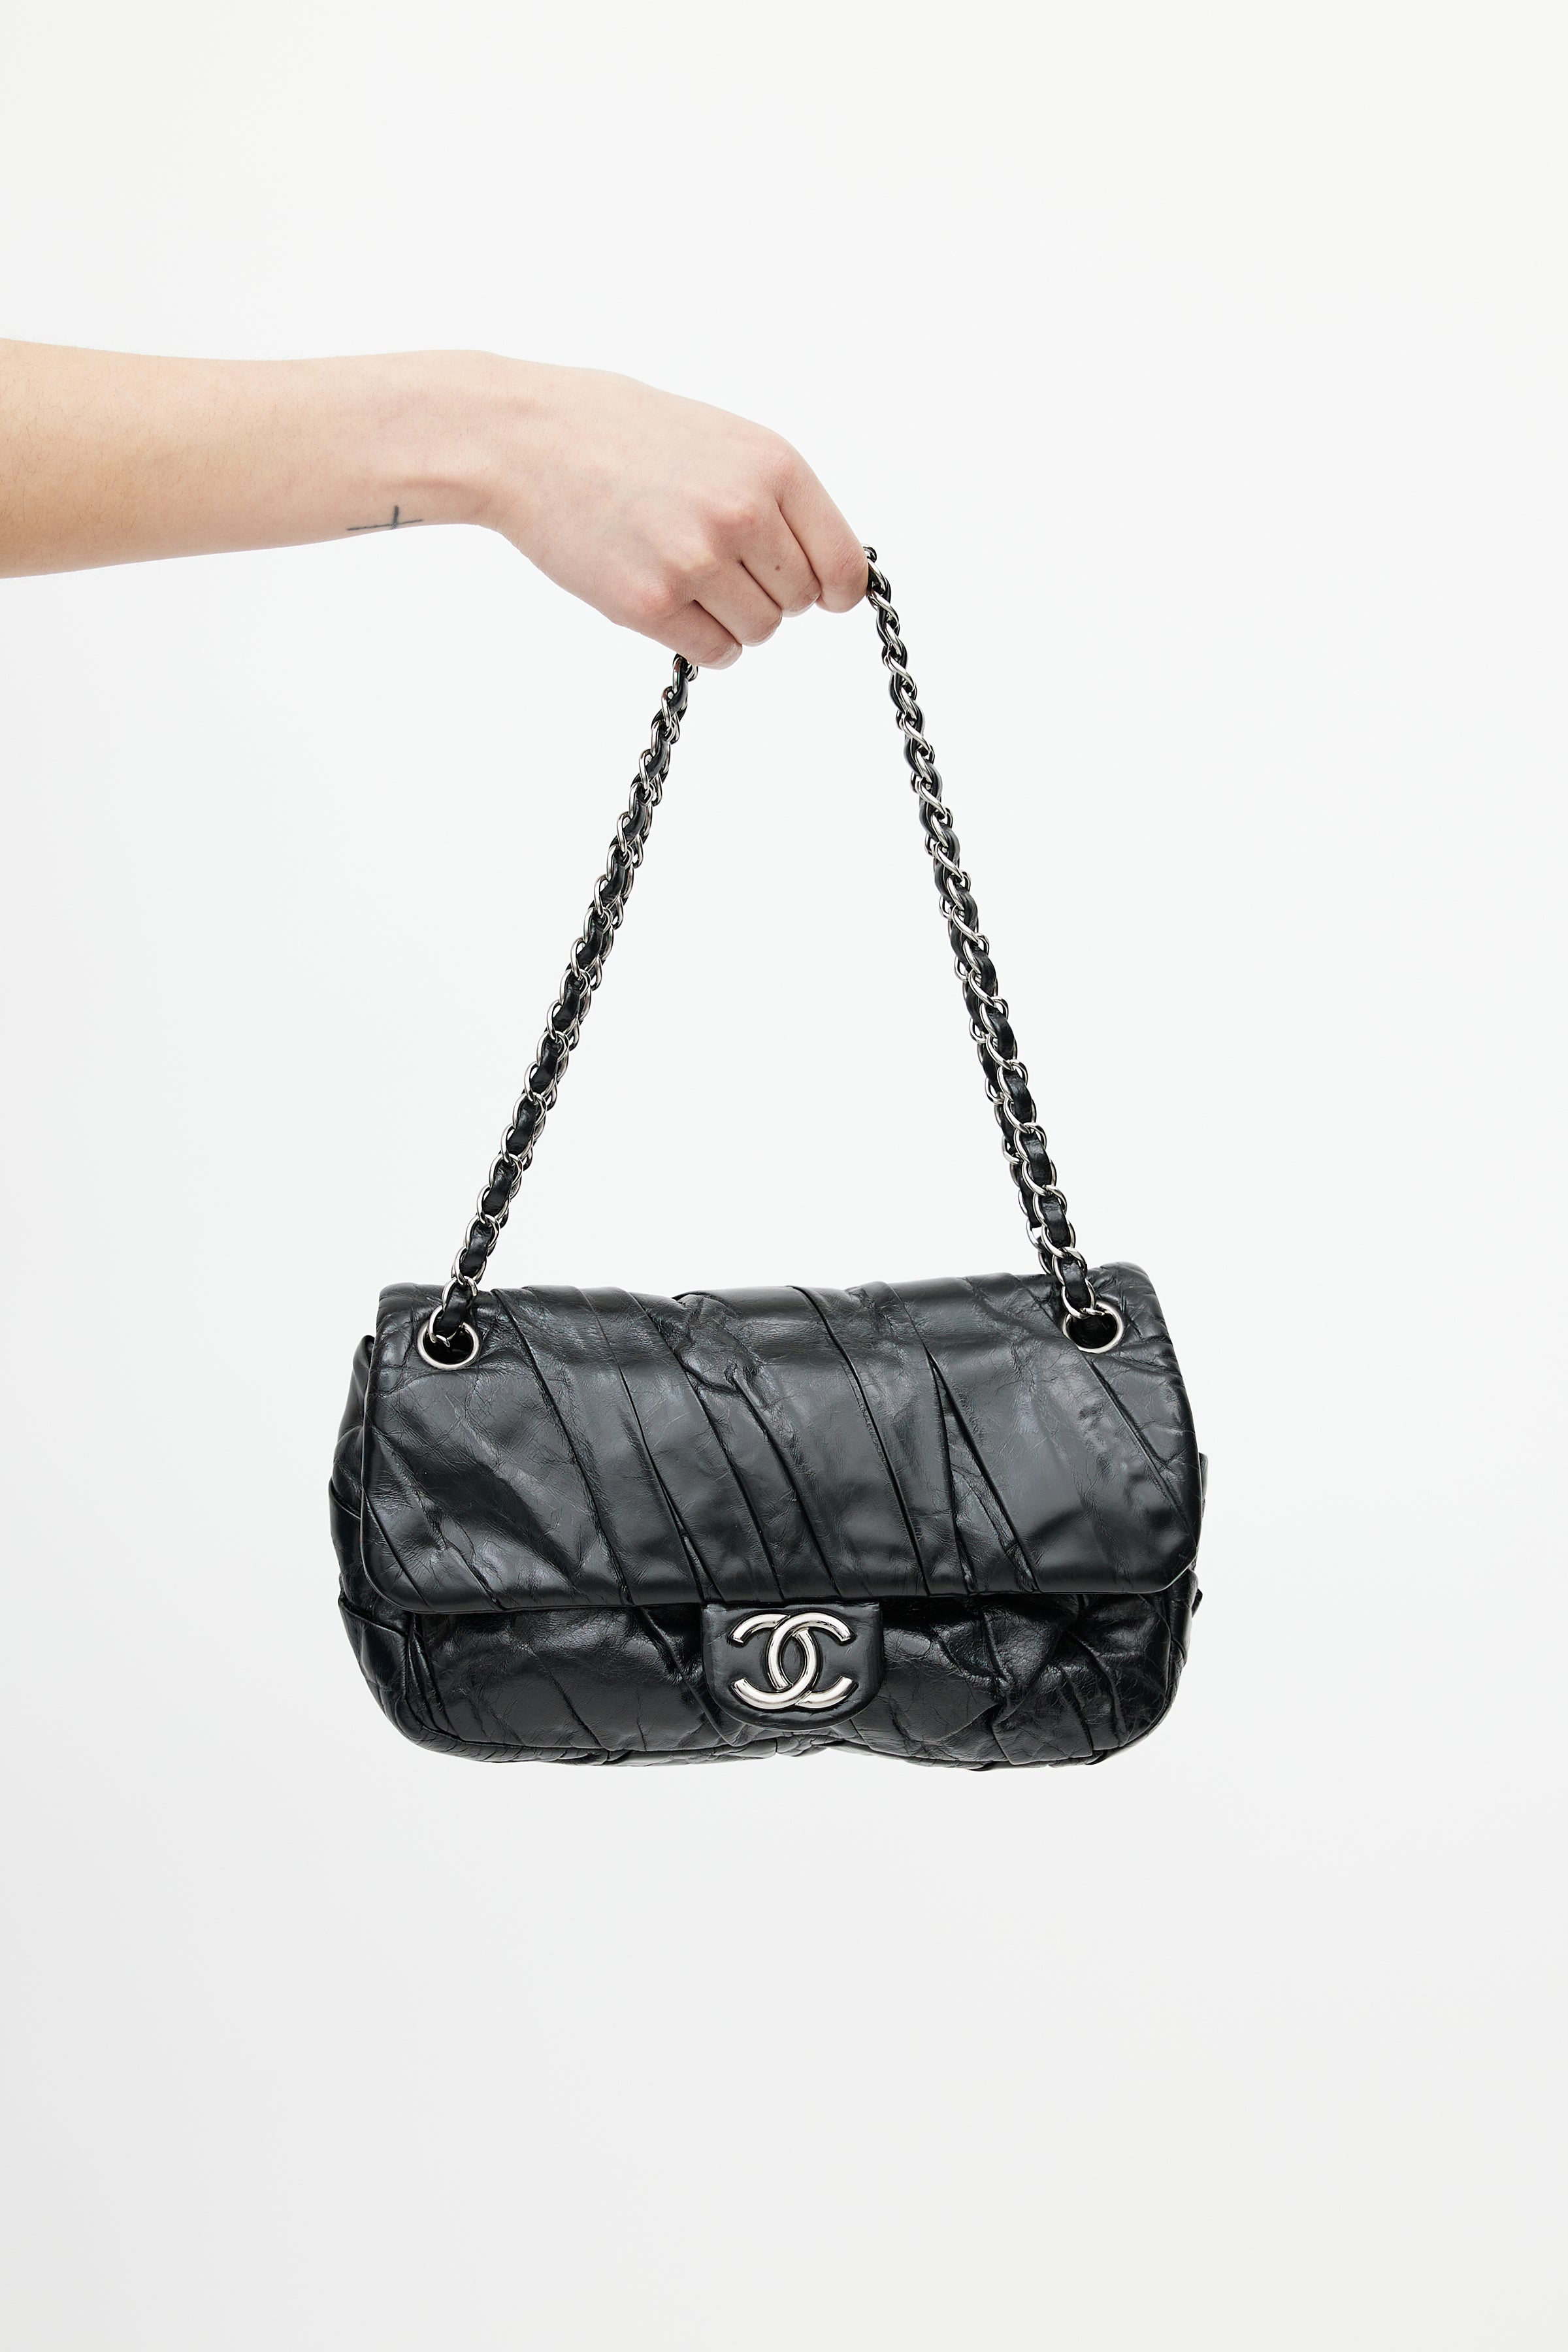 CHANEL Modern Chain Calfskin Leather Hobo Bag Black